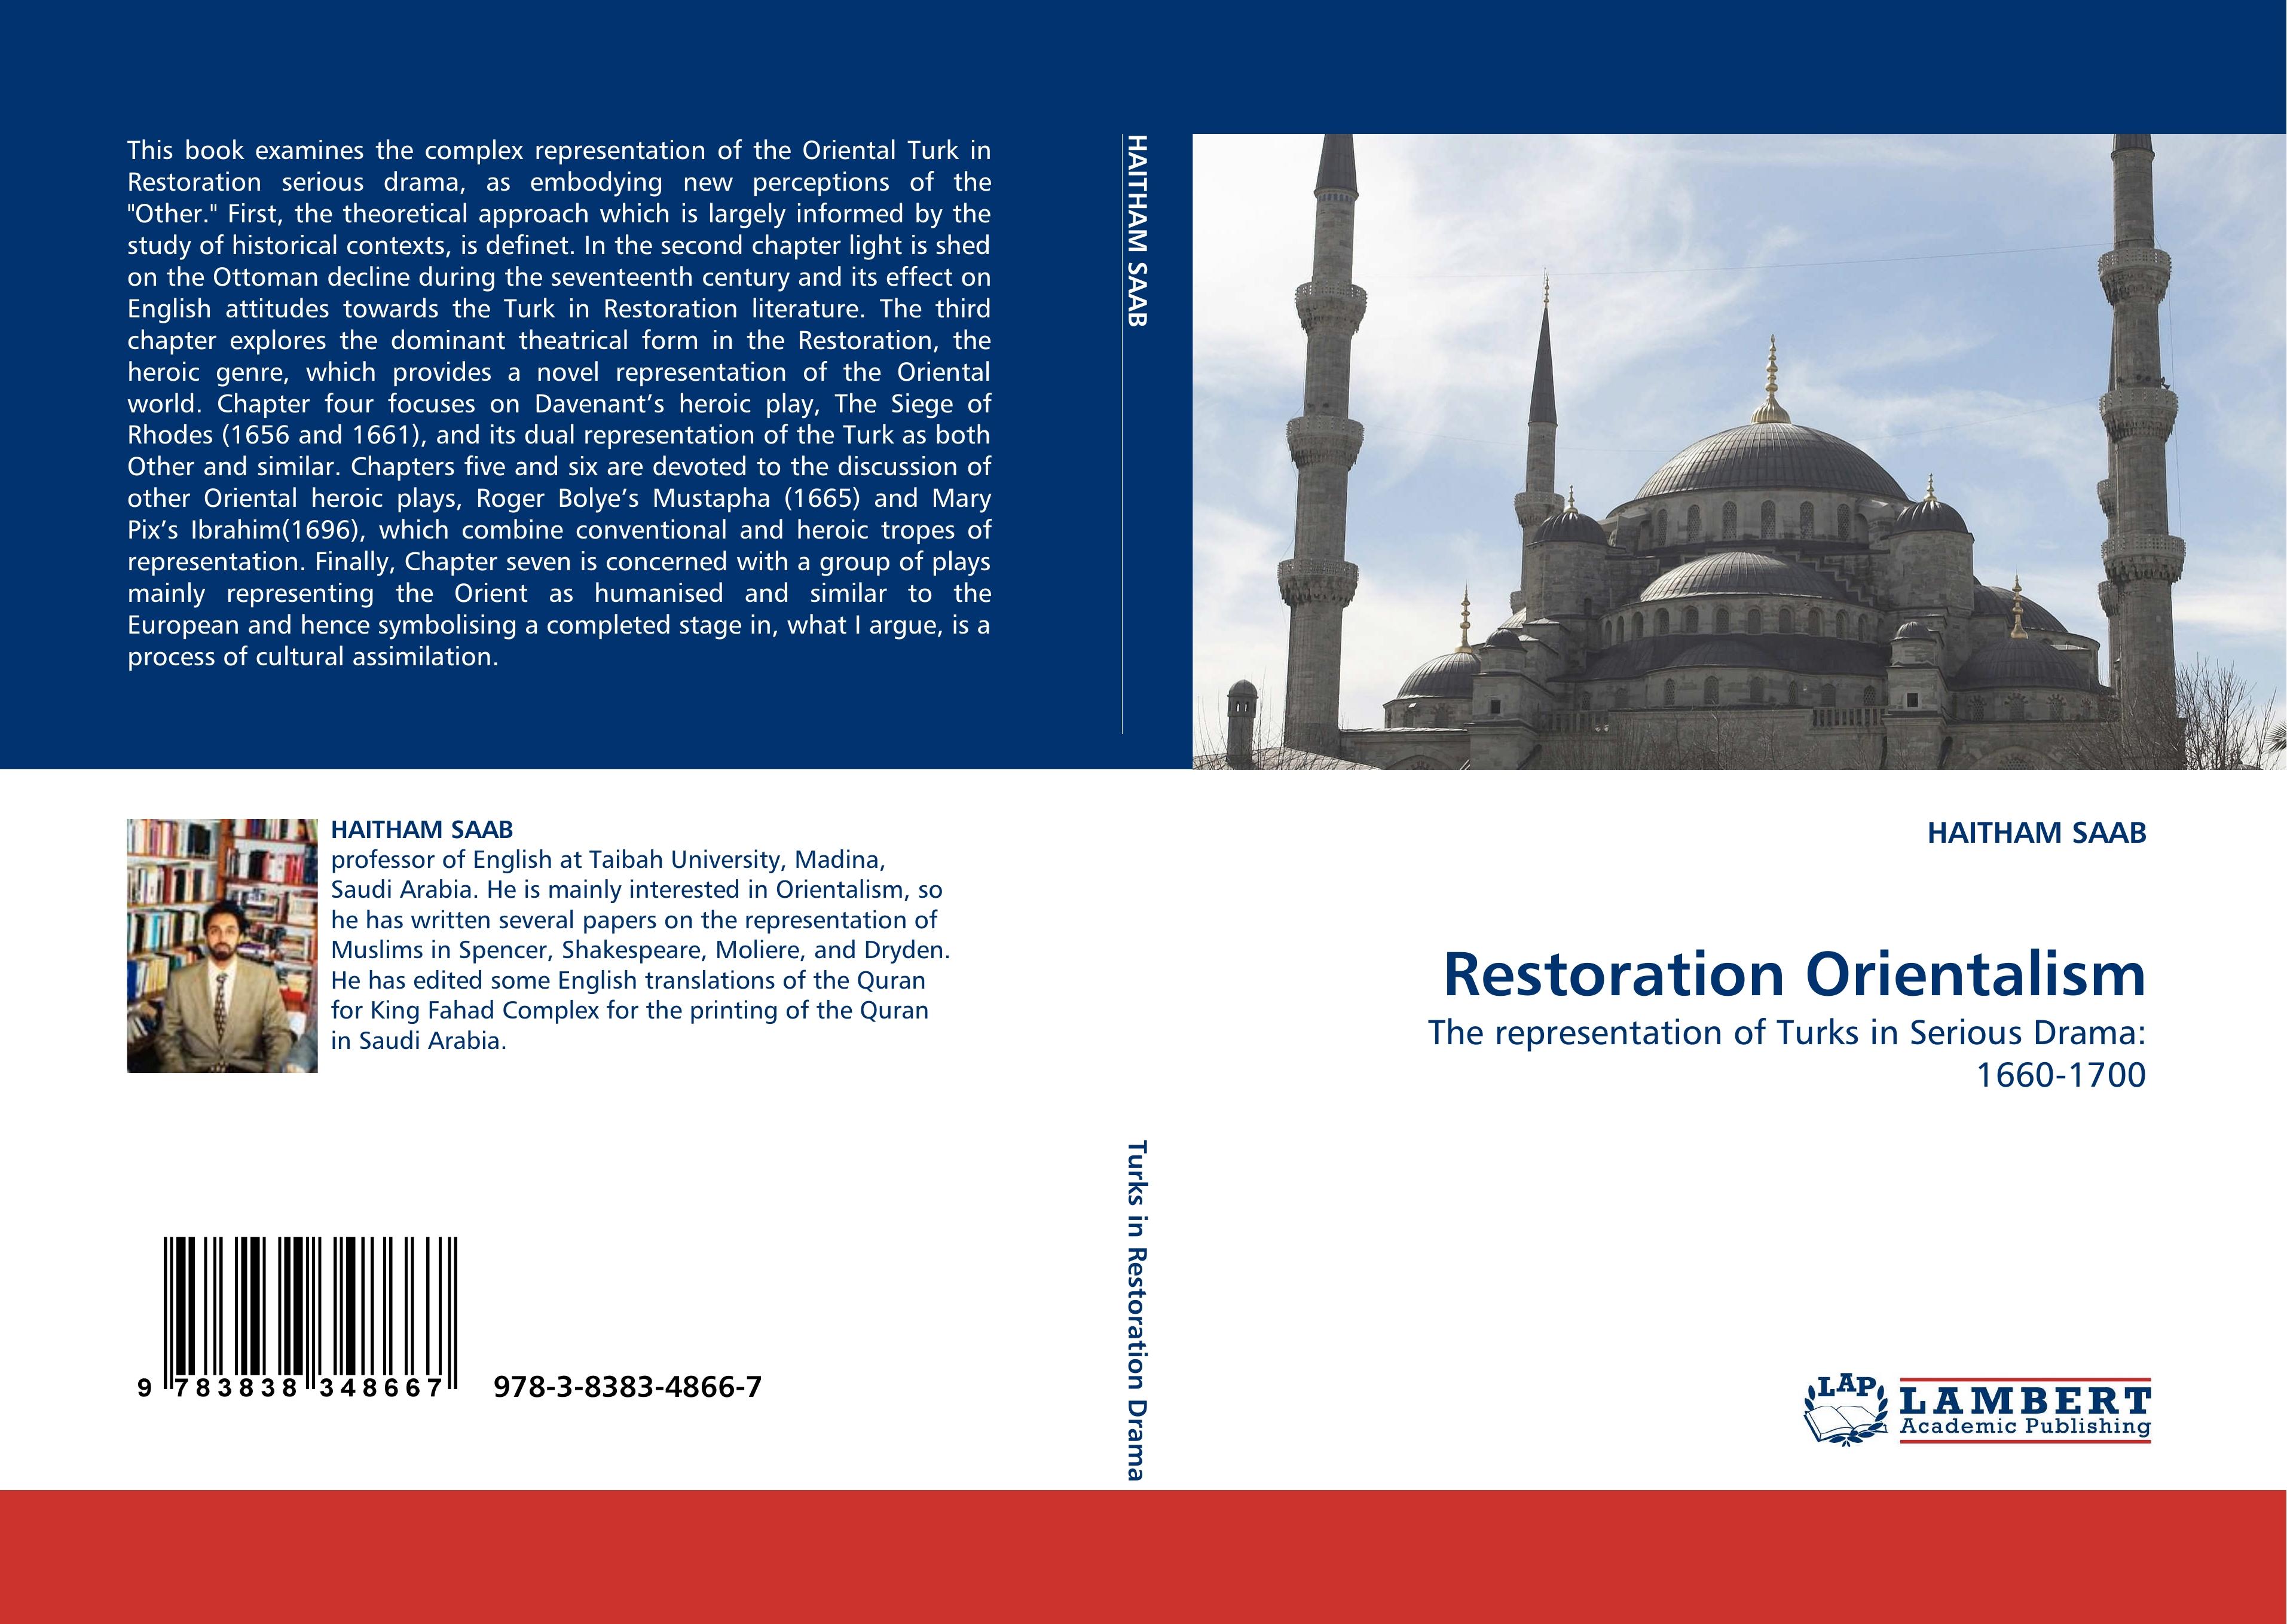 Restoration Orientalism / The representation of Turks in Serious Drama: 1660-1700 / Haitham Saab / Taschenbuch / Paperback / 232 S. / Englisch / 2010 / LAP LAMBERT Academic Publishing - Saab, Haitham